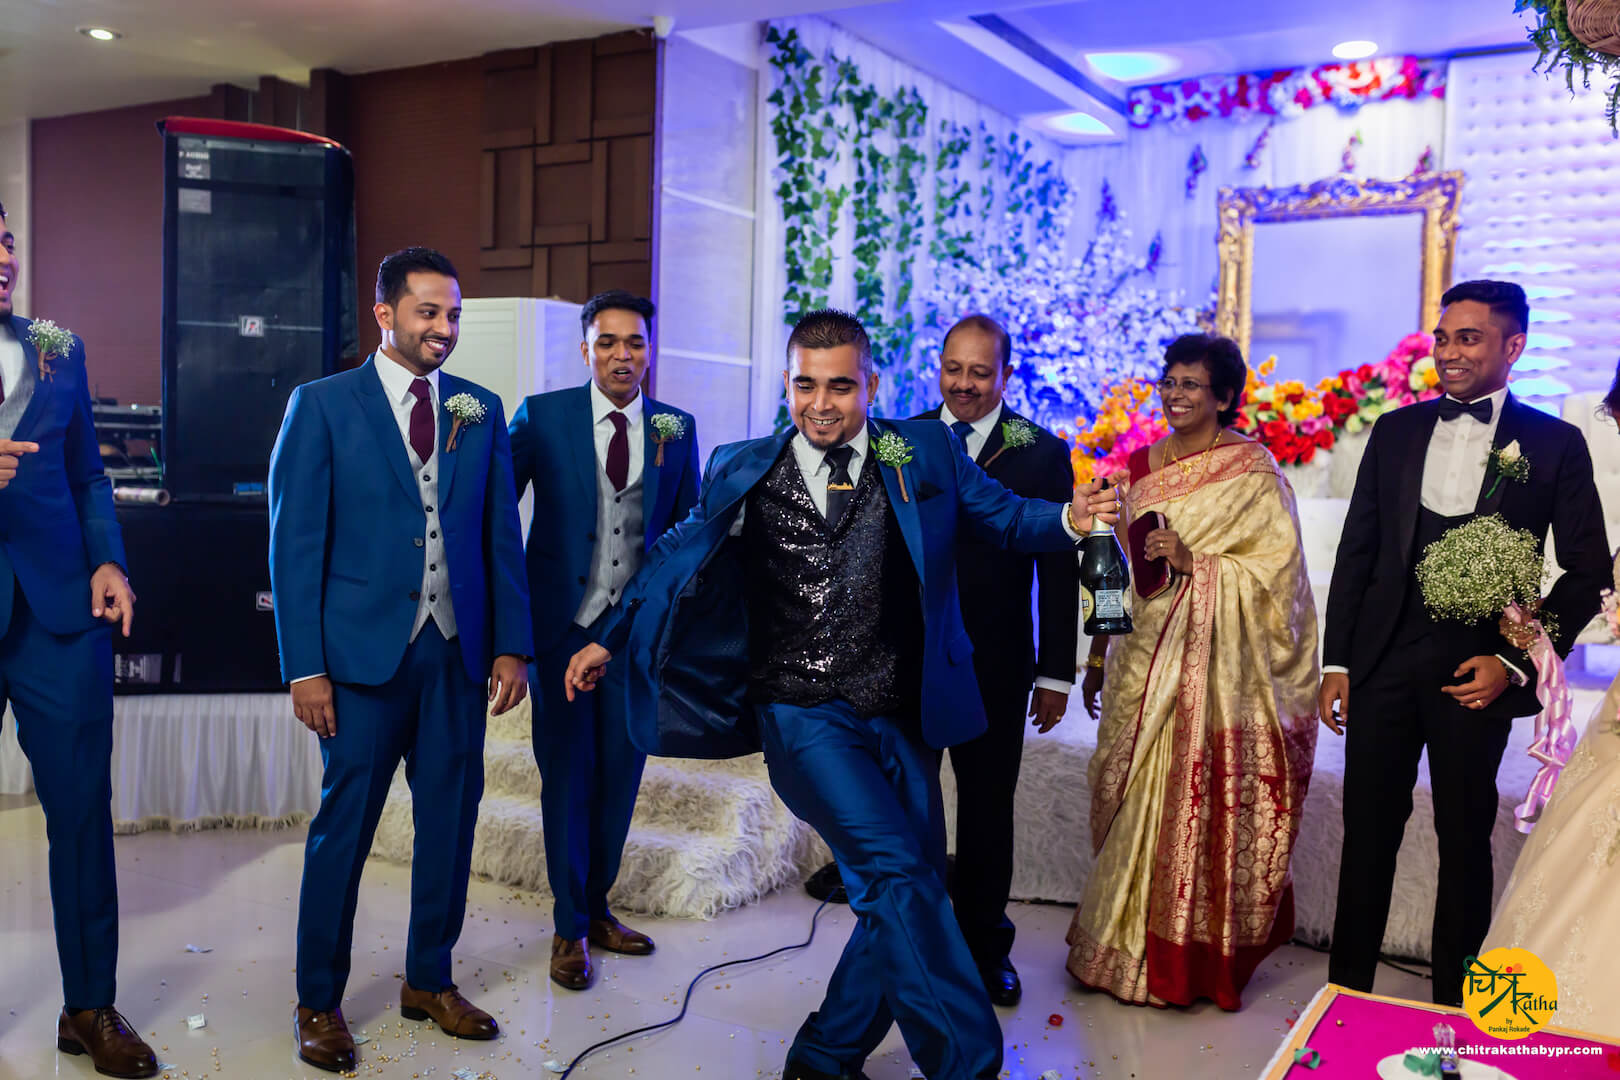 Wedding reception dance